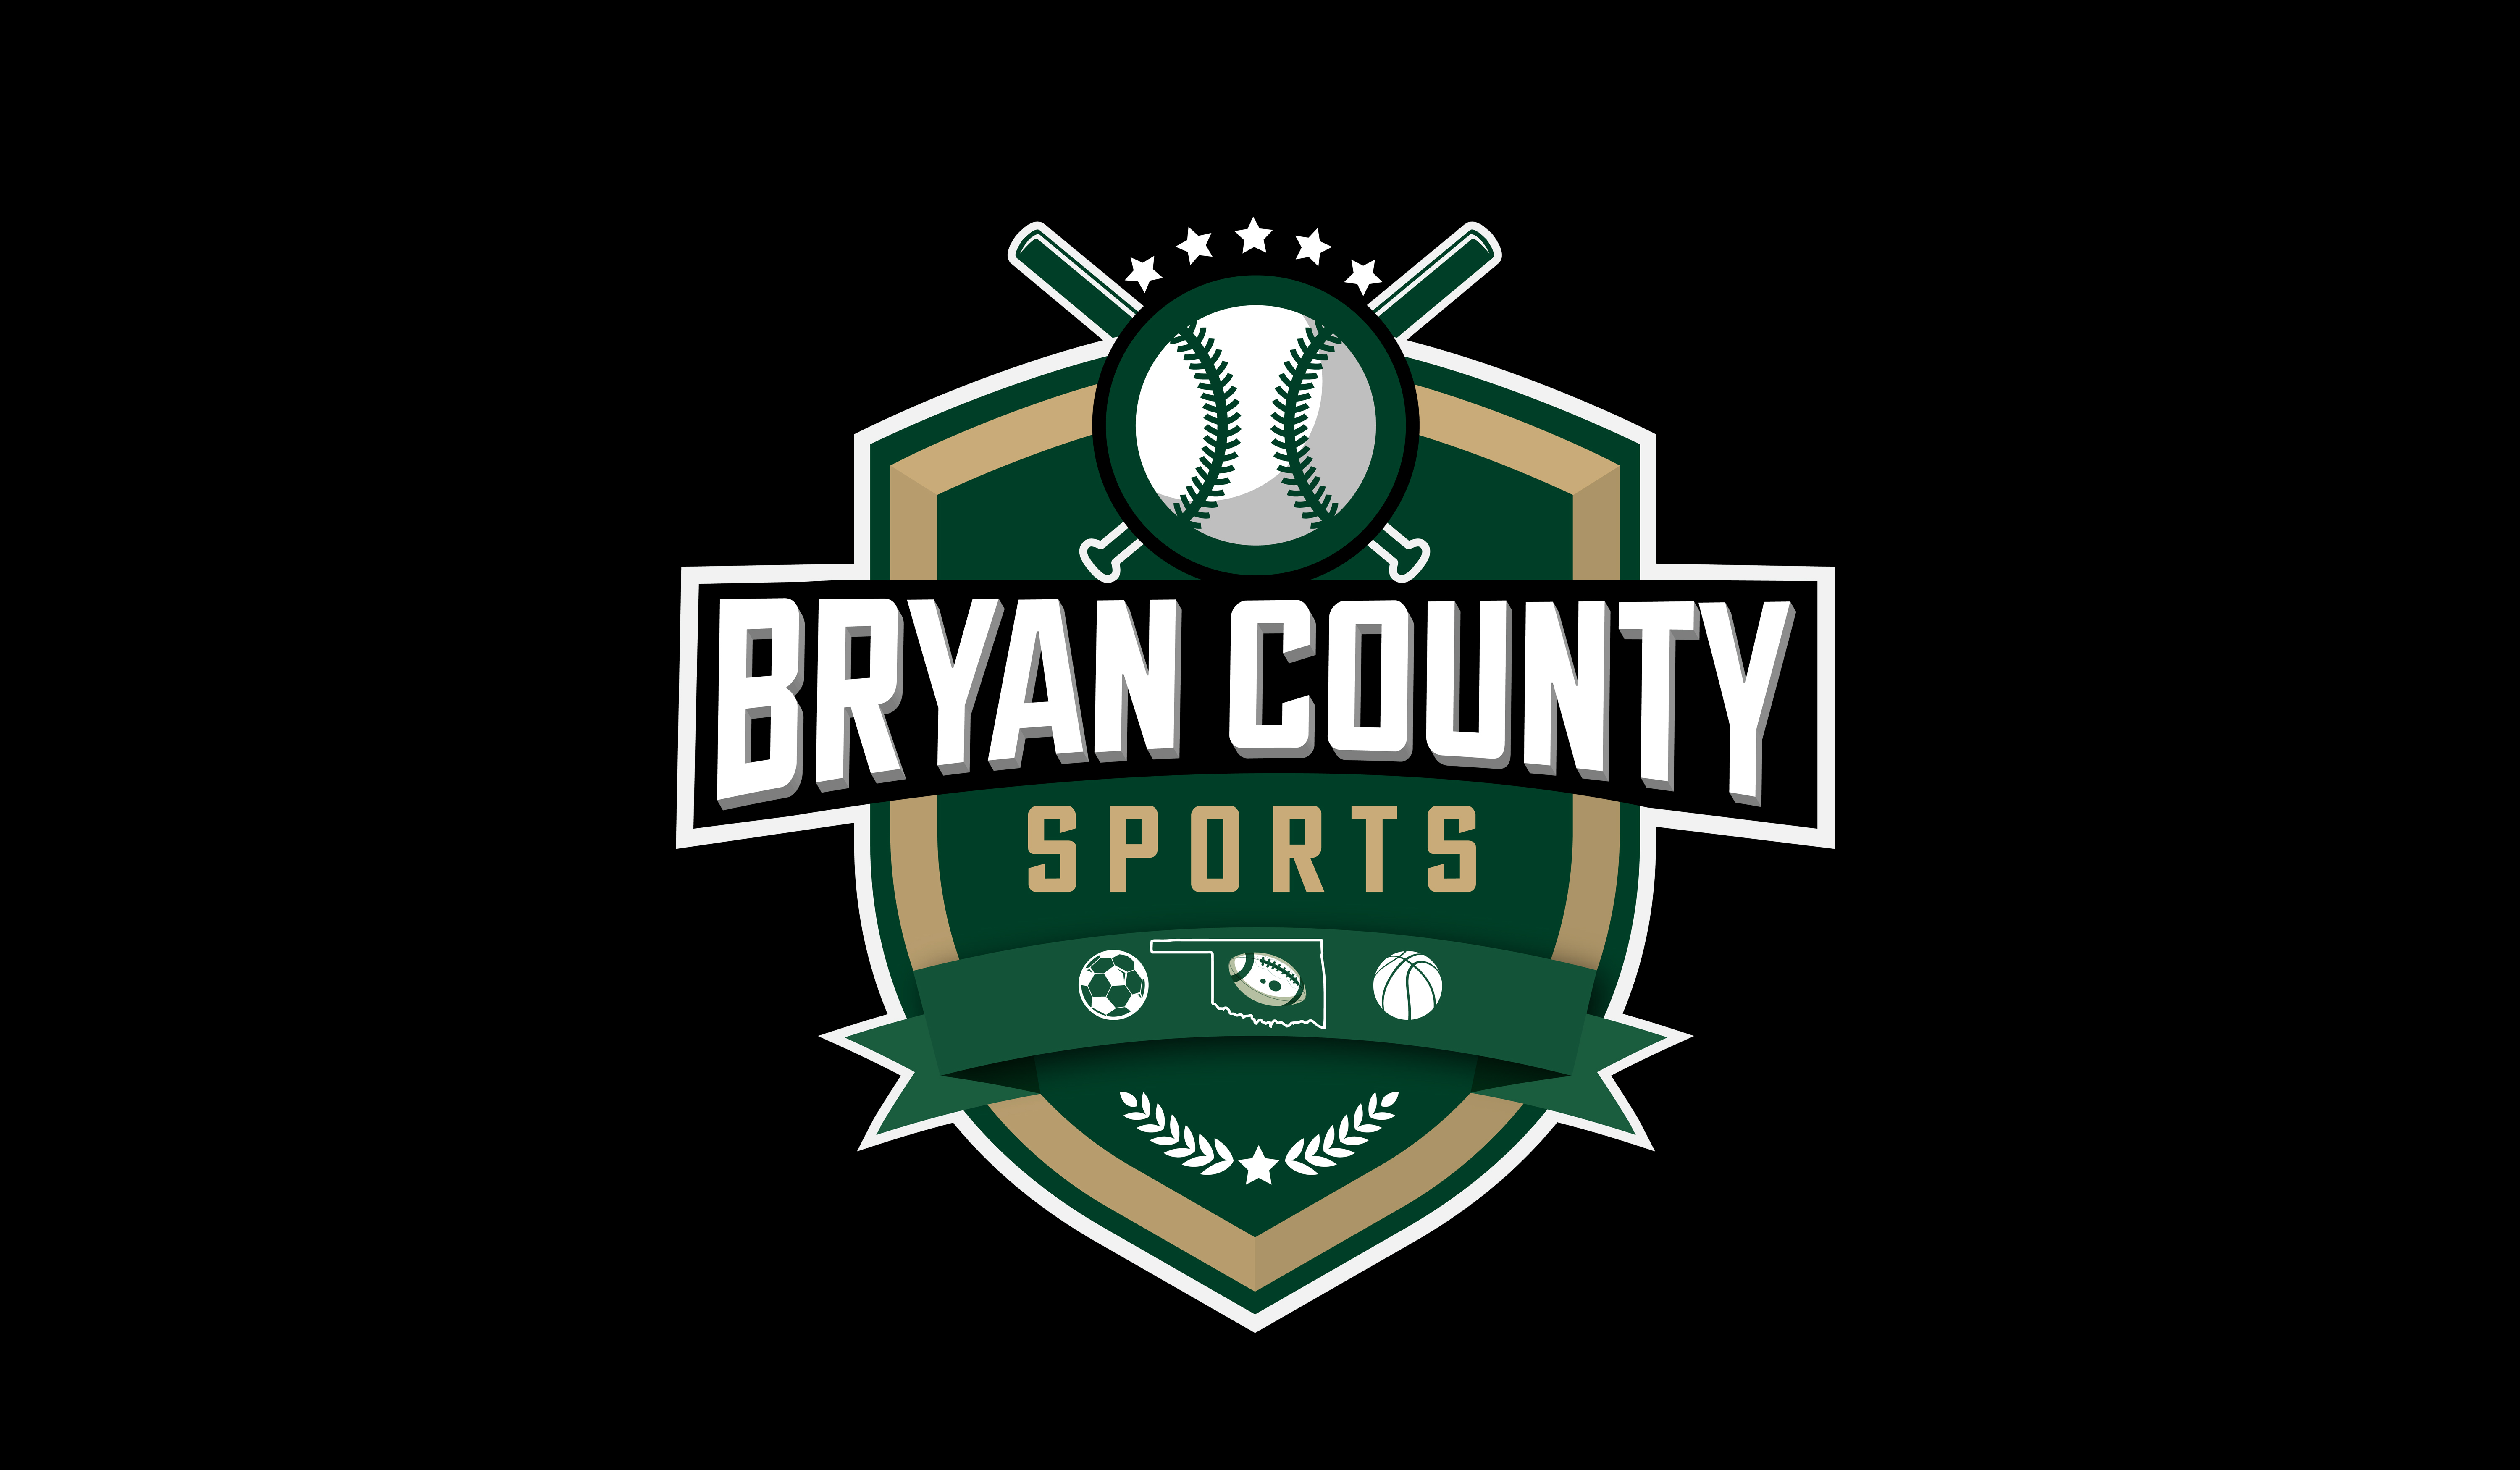 Bryan_County_Sports_new.jpg